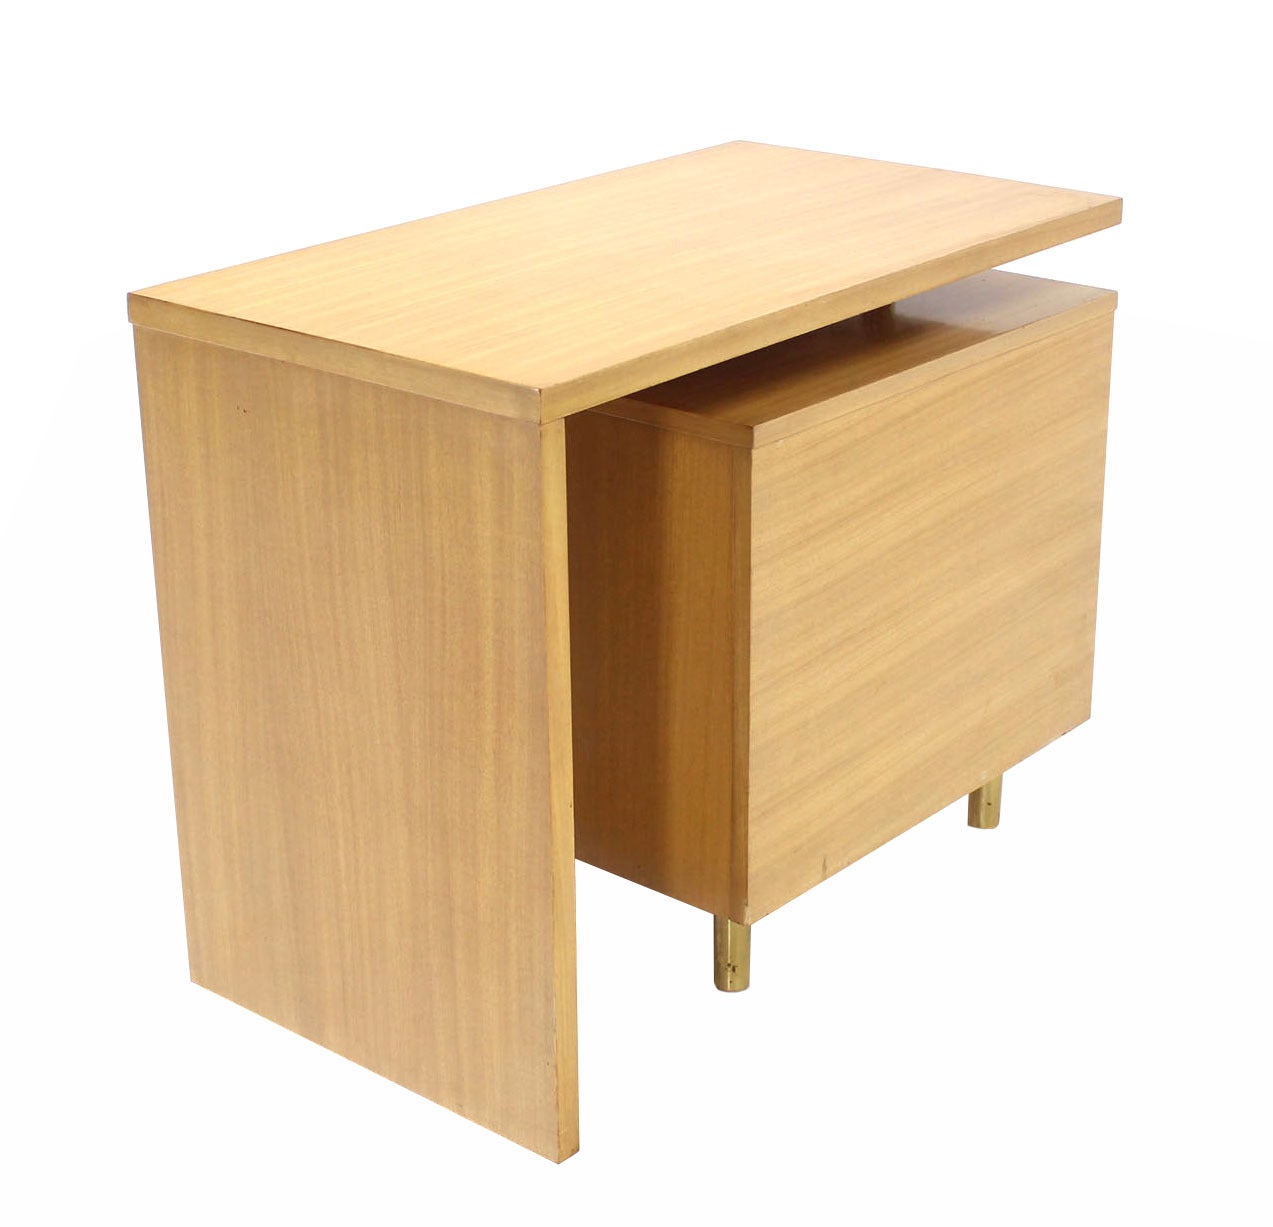 Revolving Folding Mid-Century Modern Desk Writing Table Cabinet Hide Away